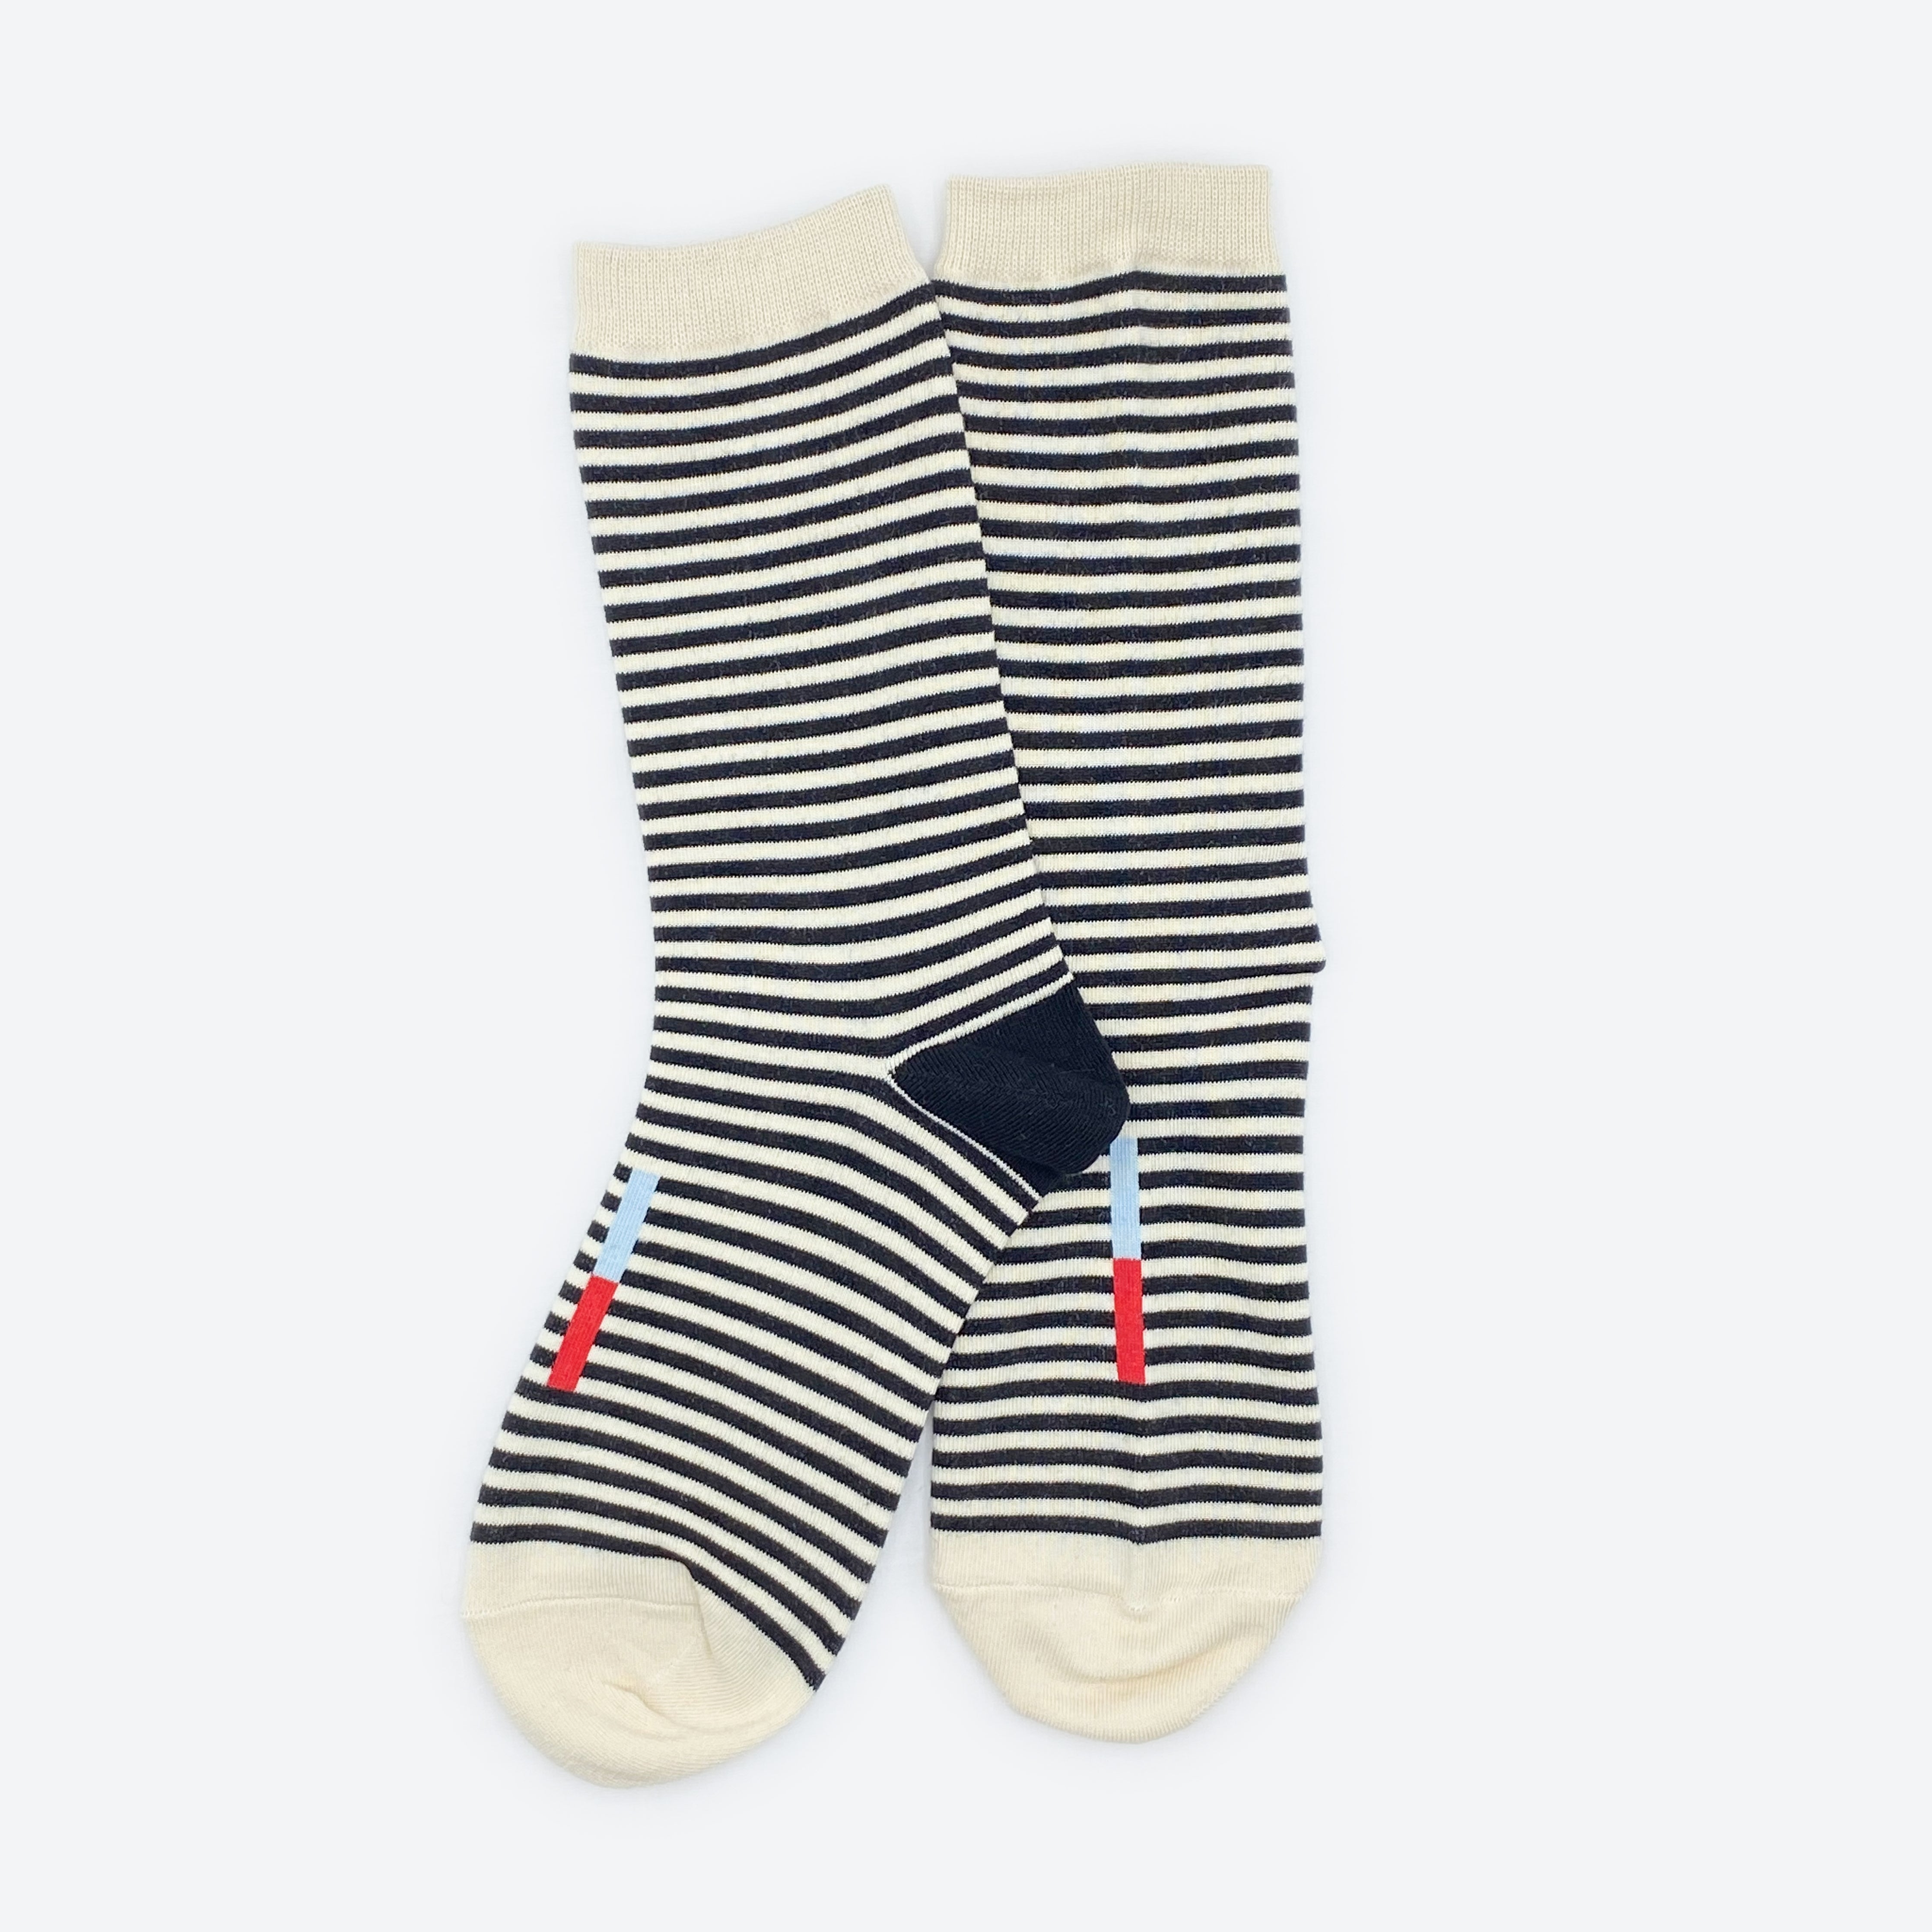 Hooray Sock Co.'s Cole Crew Socks: Classic black & off-white stripes, 80% cotton/20% spandex blend. Men's (8-12) & women's (4-10) sizes.